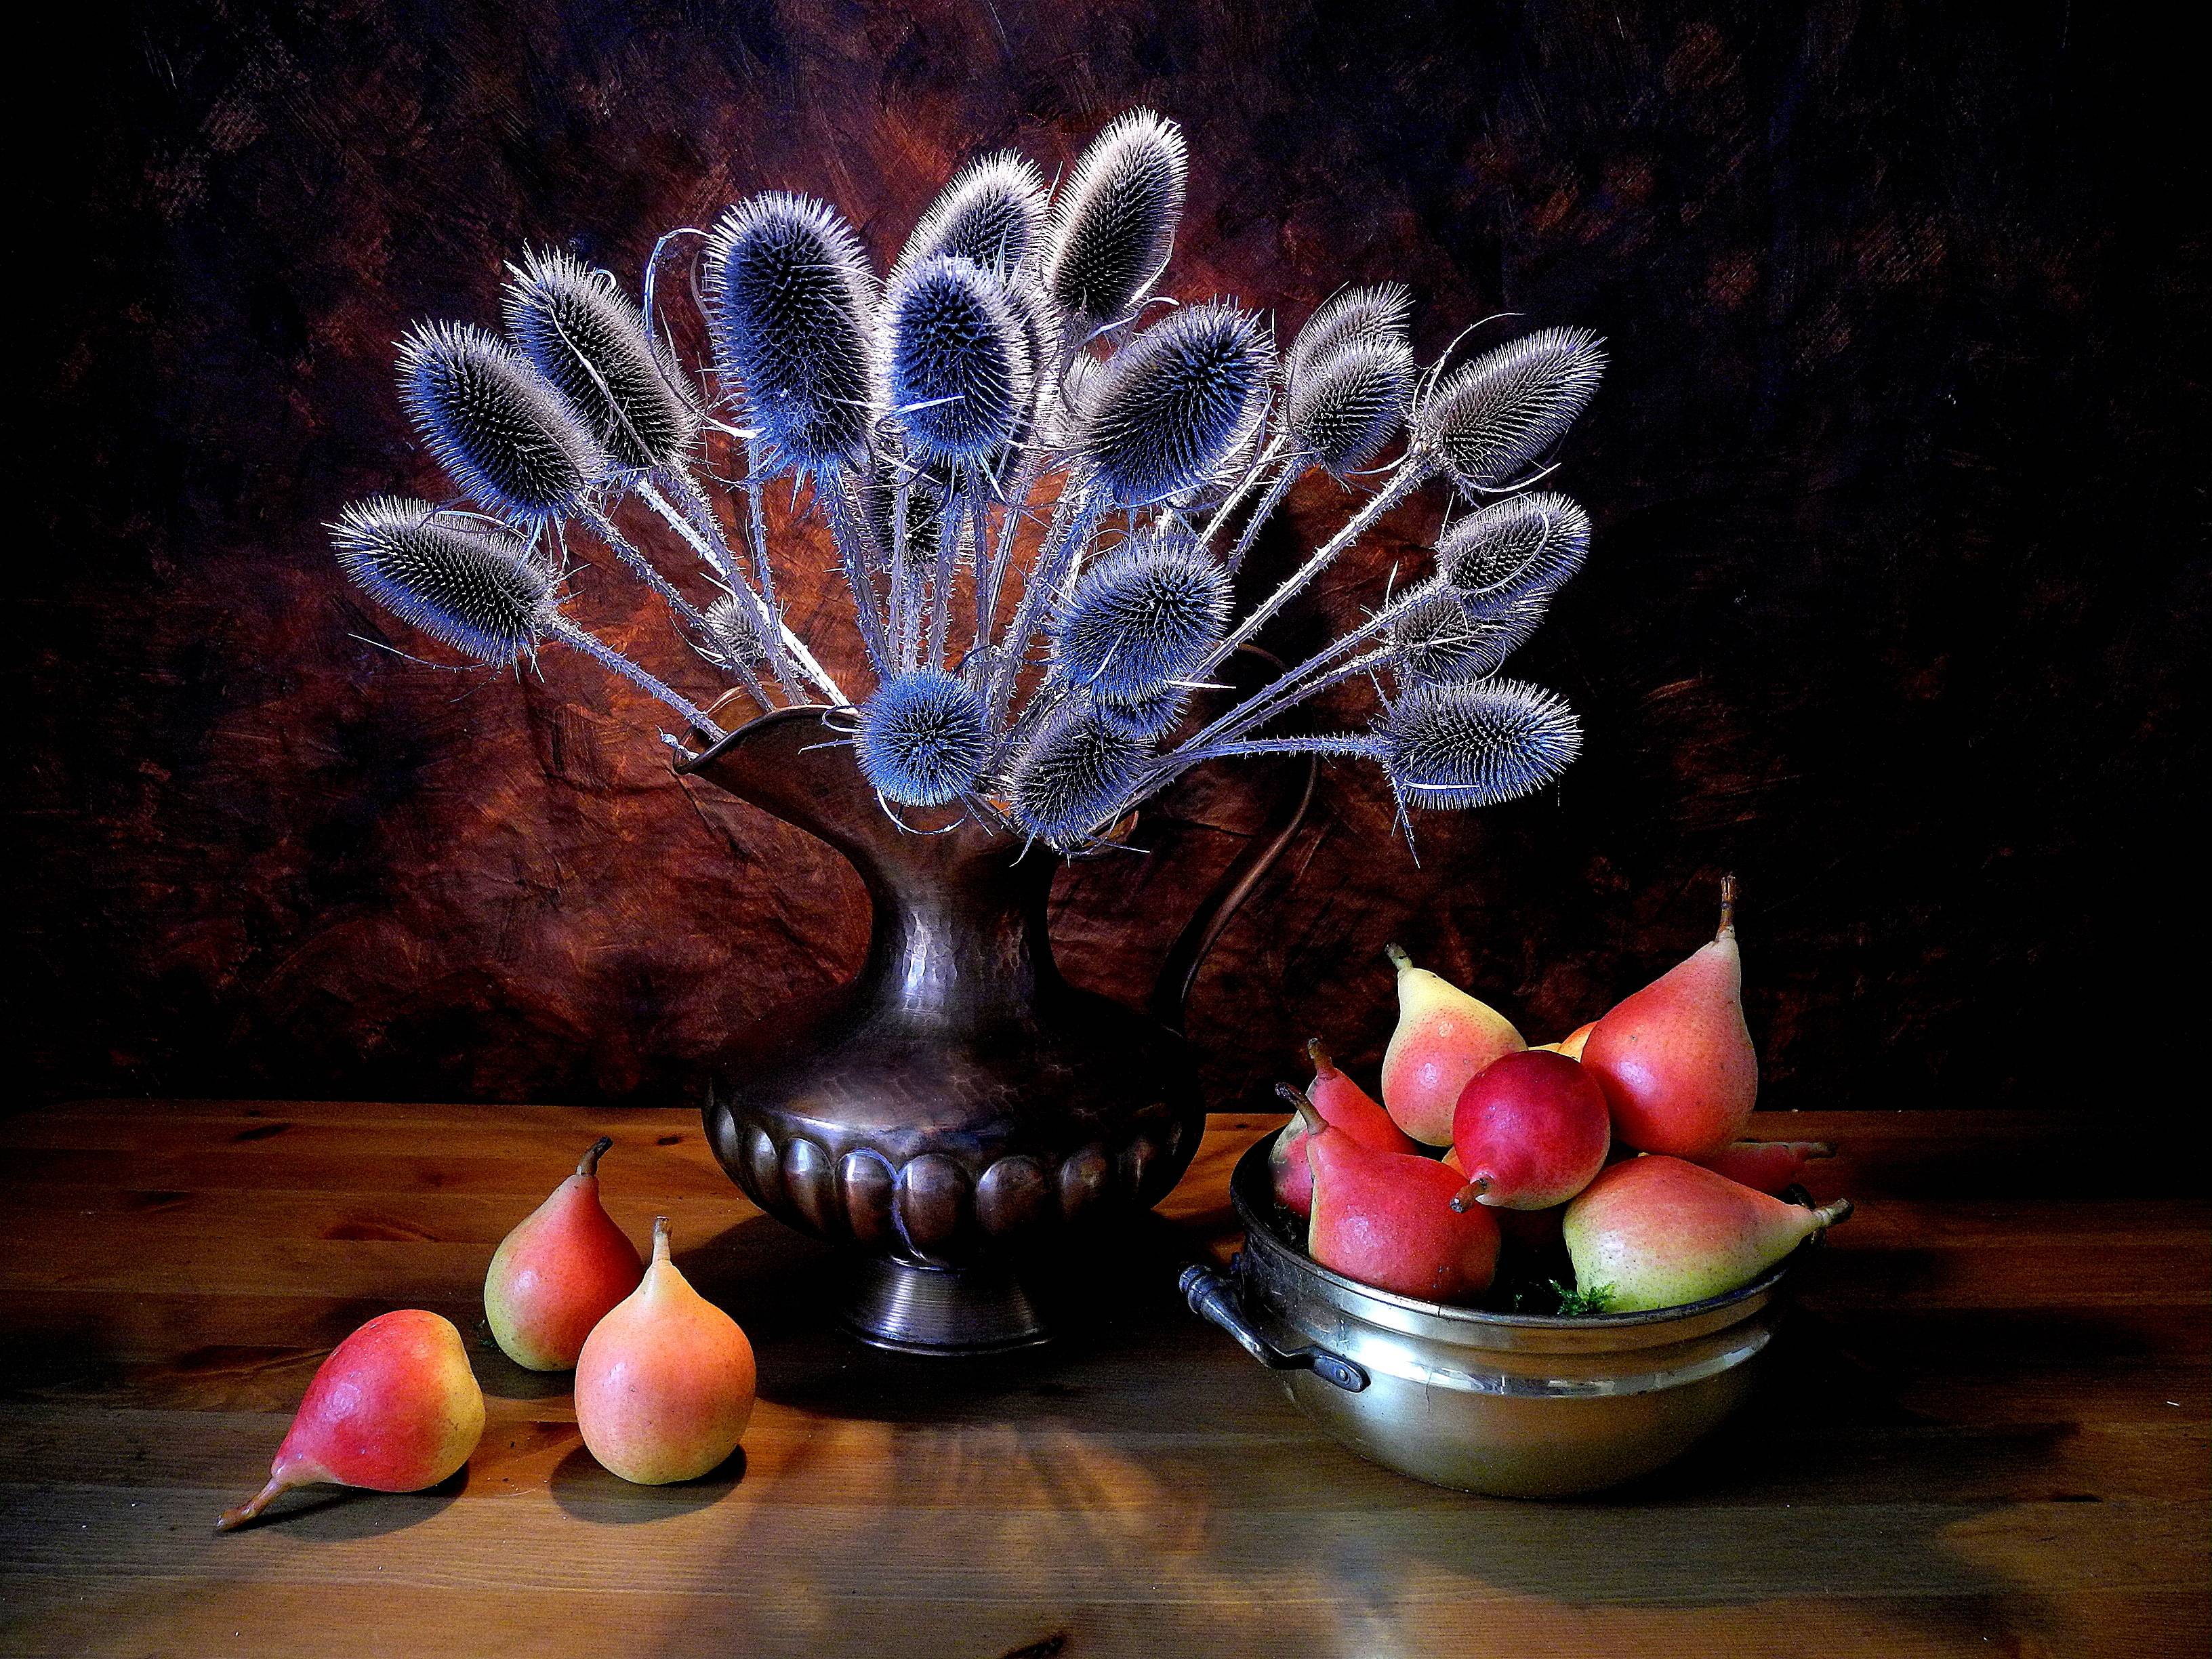 Wallpapers vase plants pears on the desktop